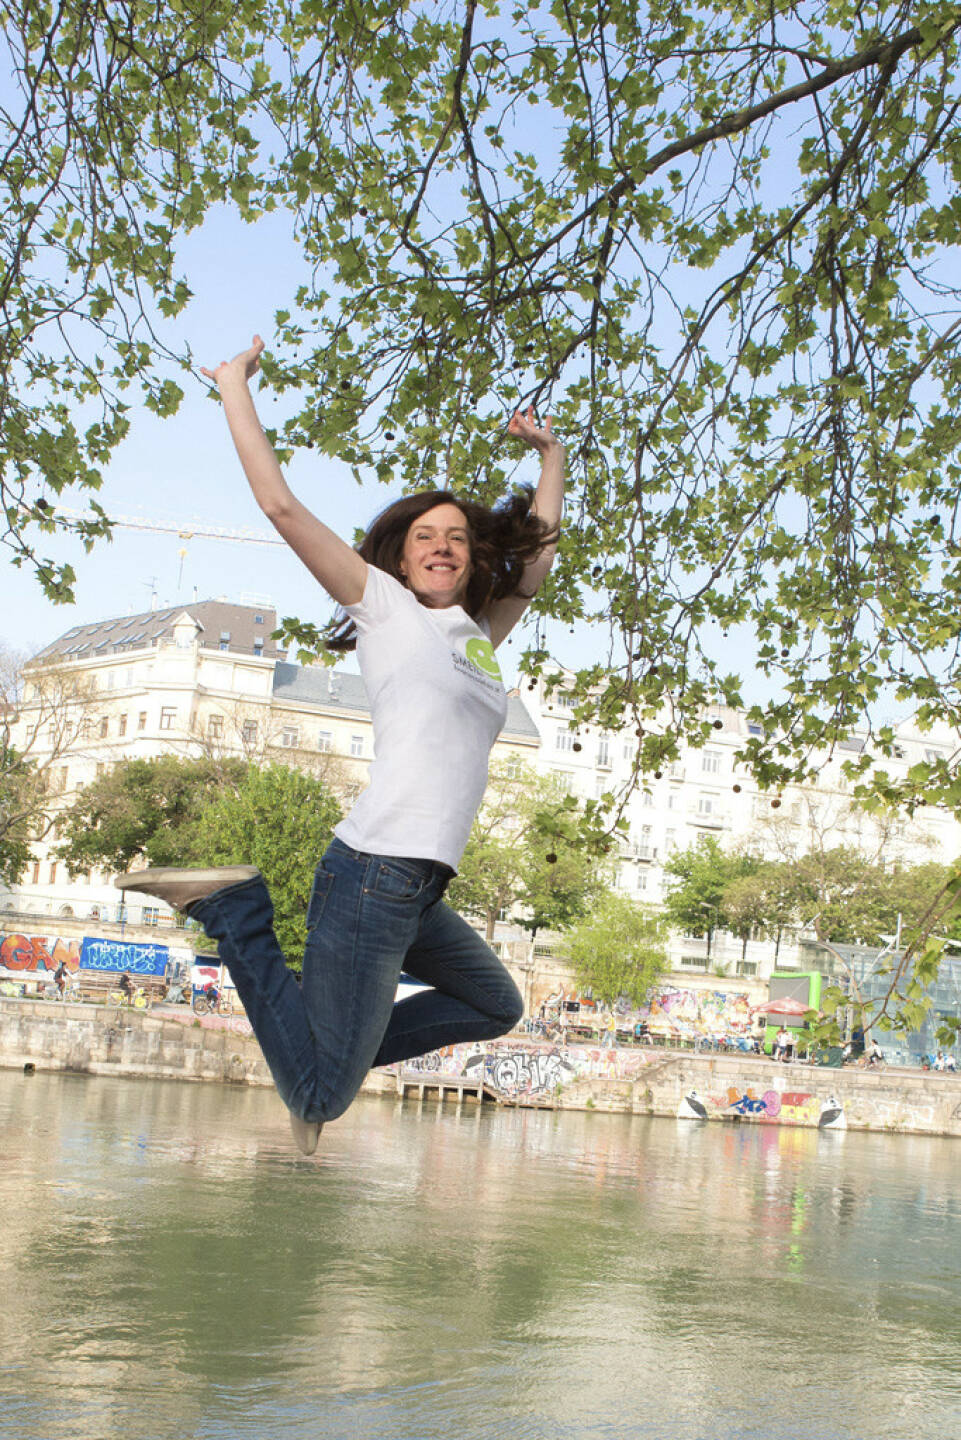 Jump Smeil! Martina Draper, Fotografin